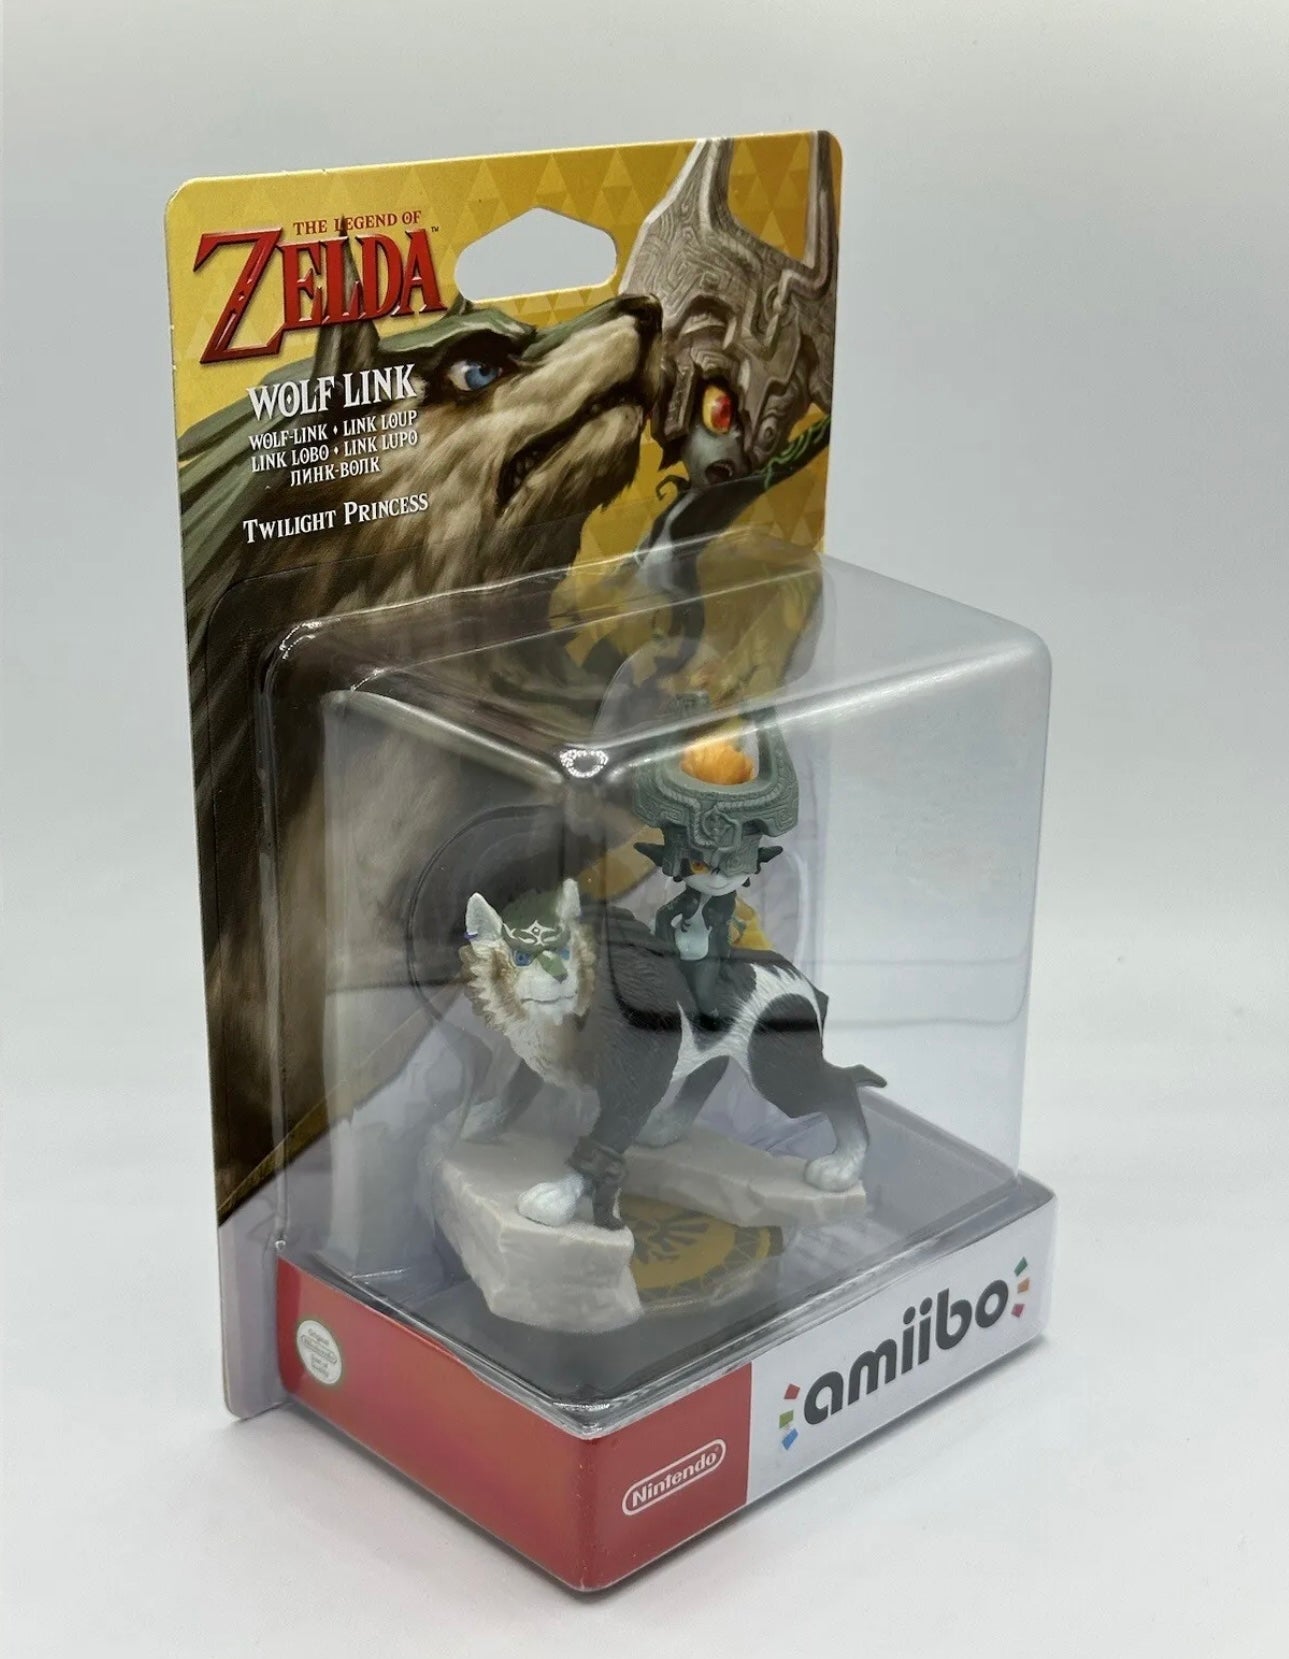 Legend Of Zelda Wolf Link amiibo